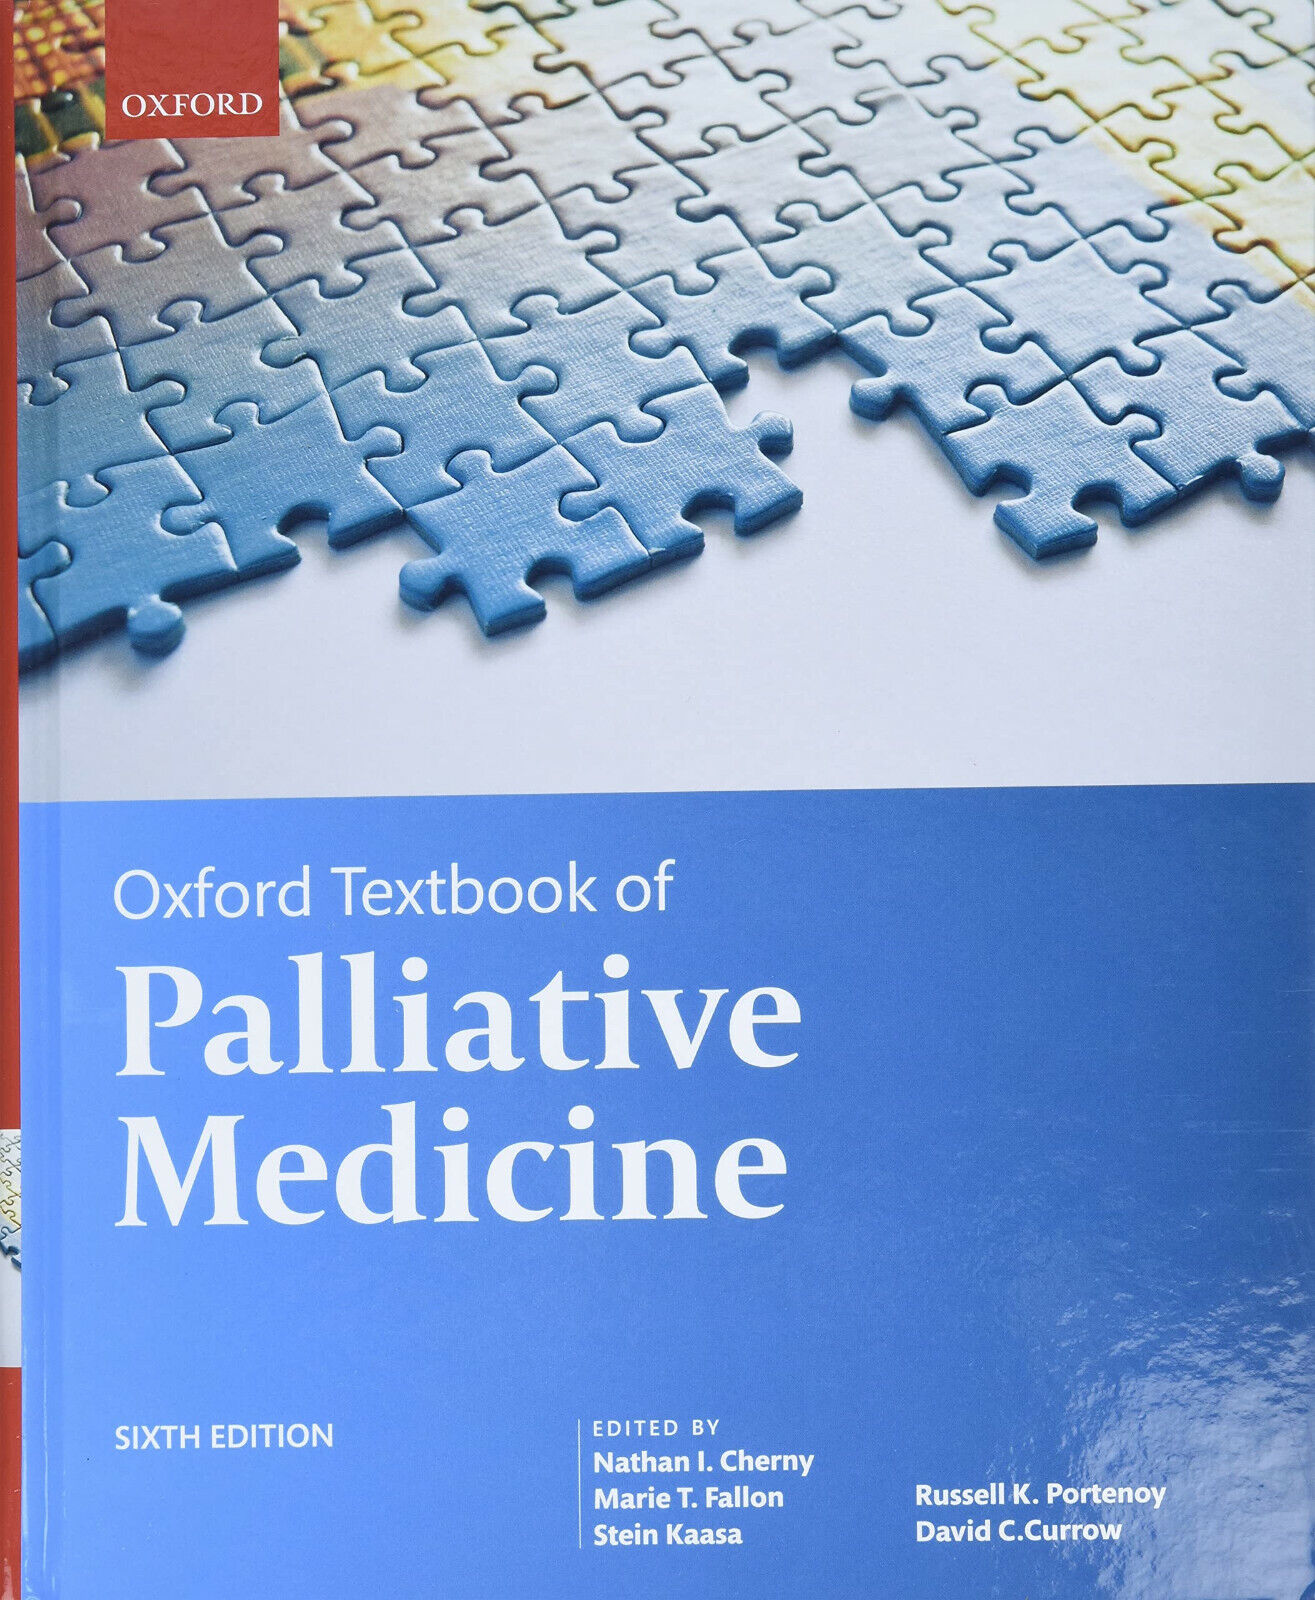 Oxford Textbook of Palliative Medicine - Nathan I. Cherny - Oxford, 2021